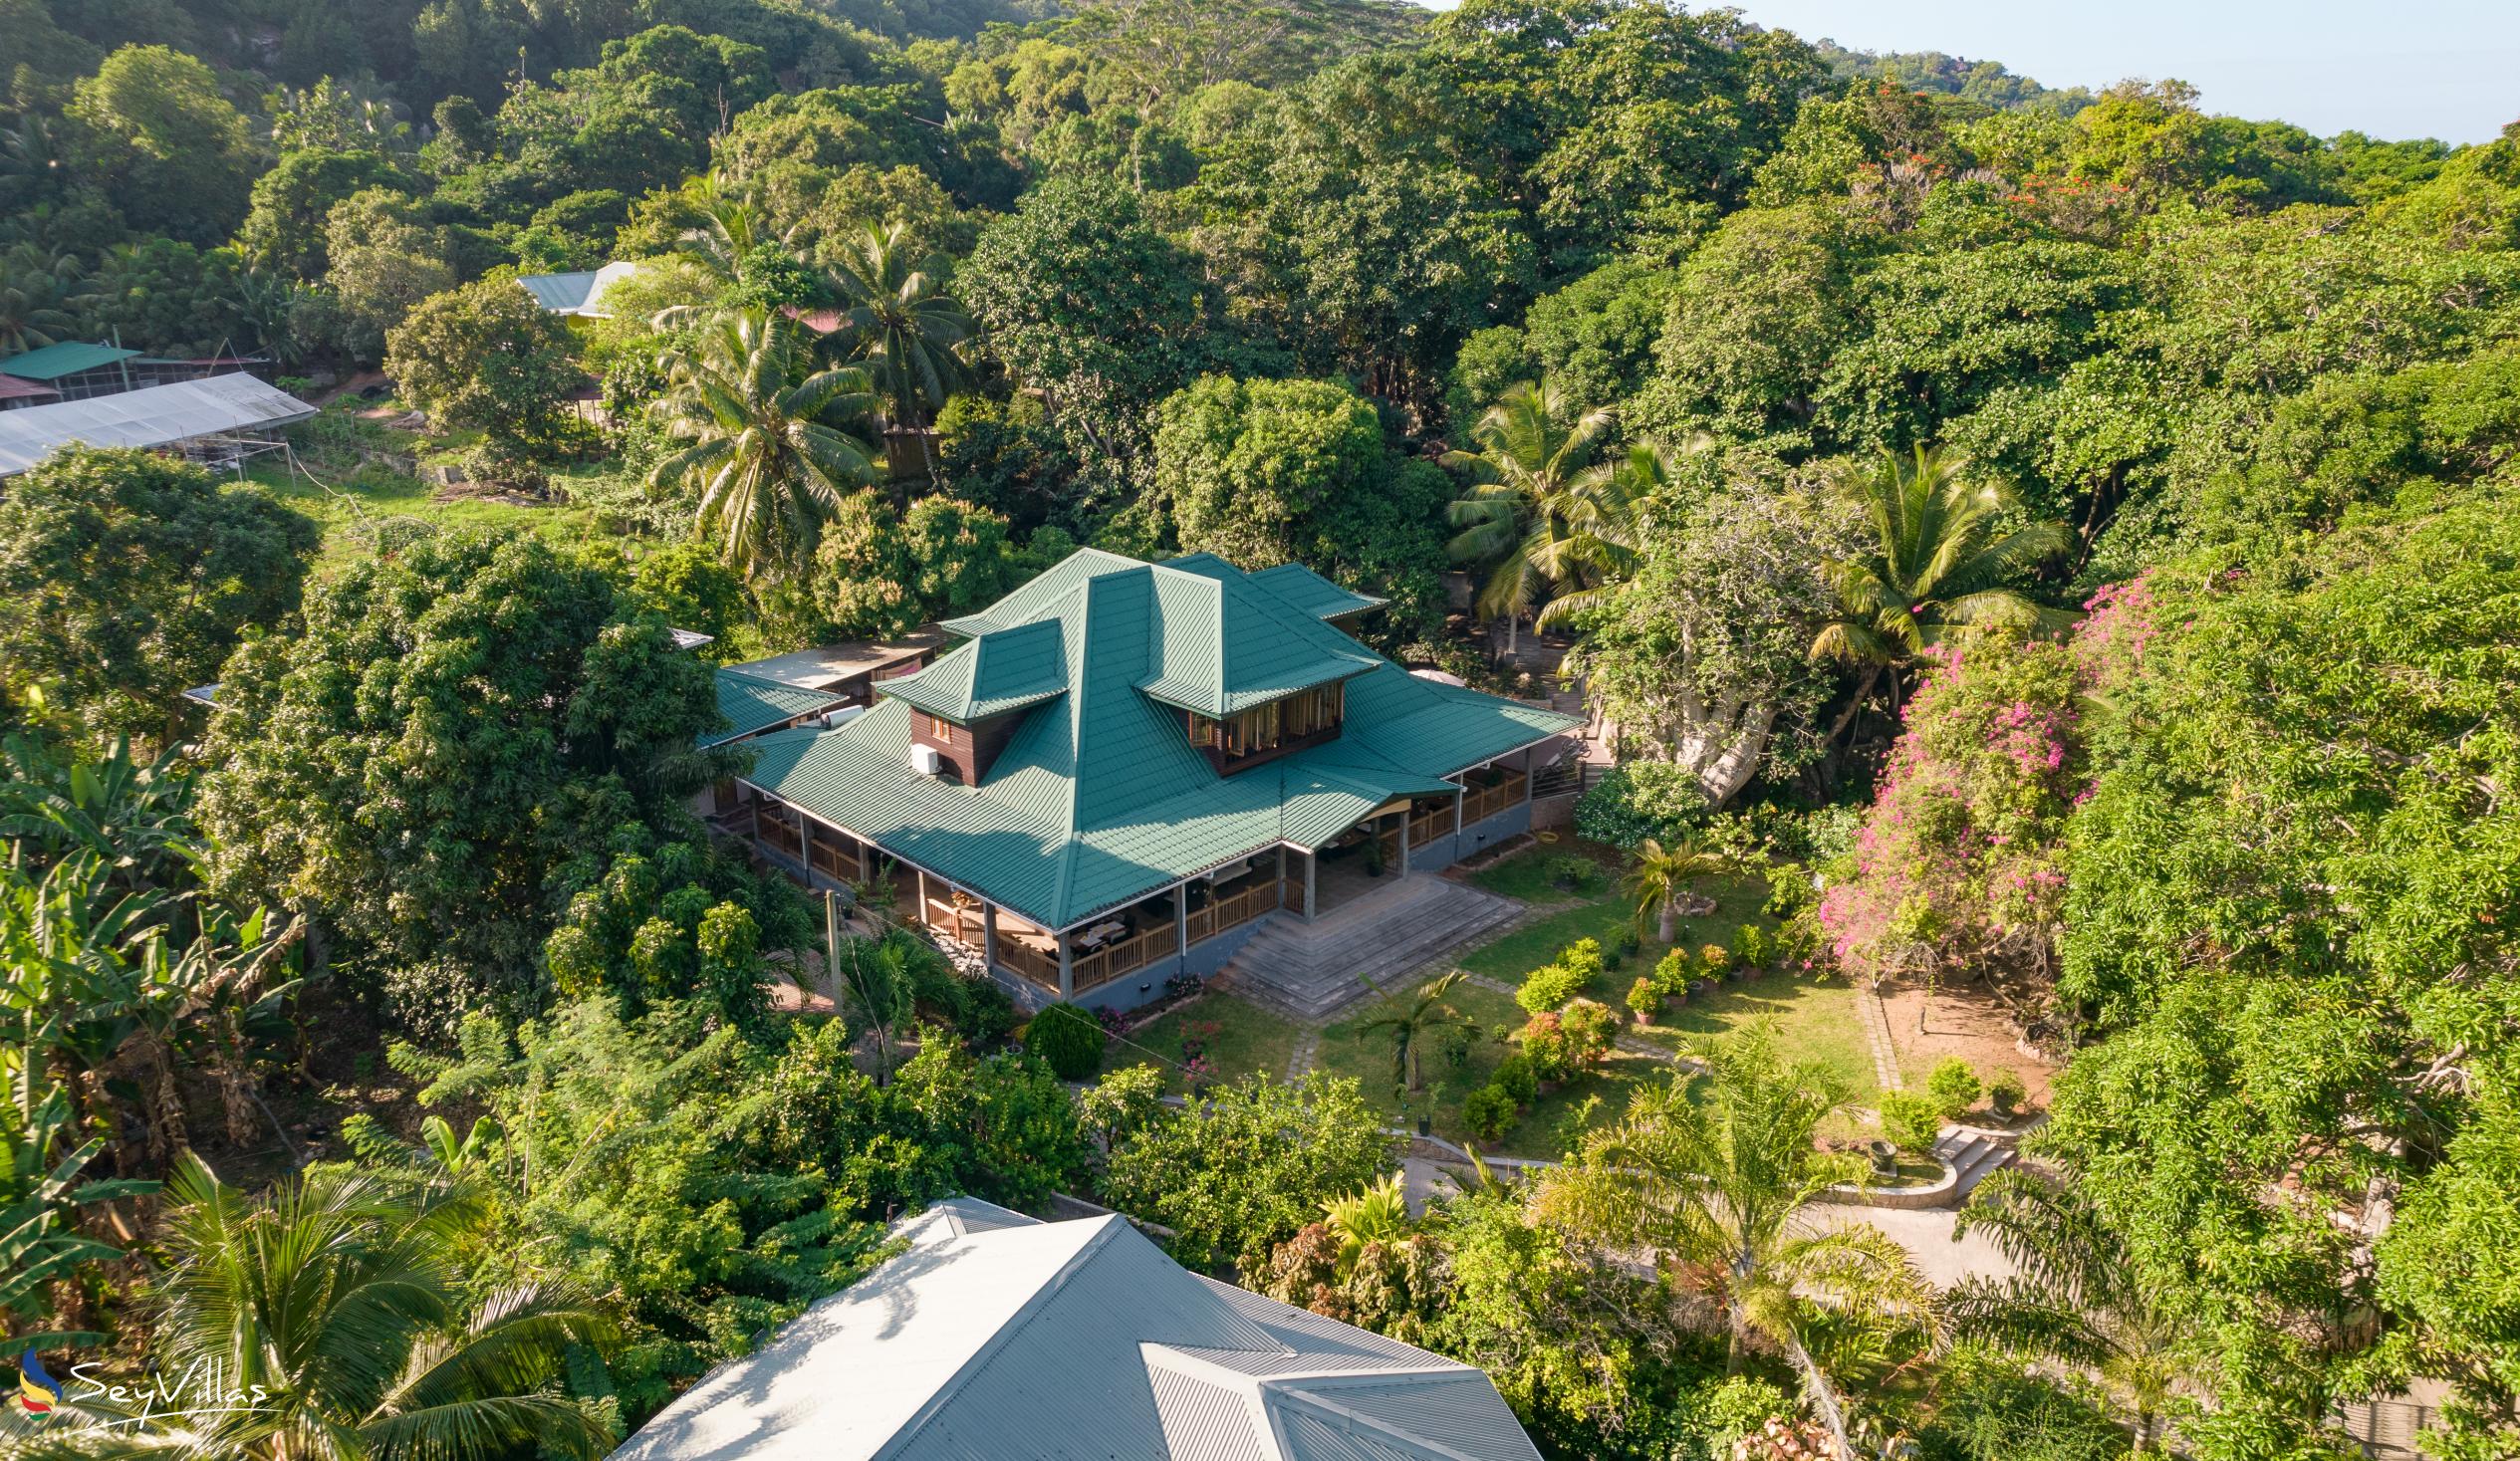 Photo 3: Pension Michel - Villa Roche Bois - Outdoor area - La Digue (Seychelles)